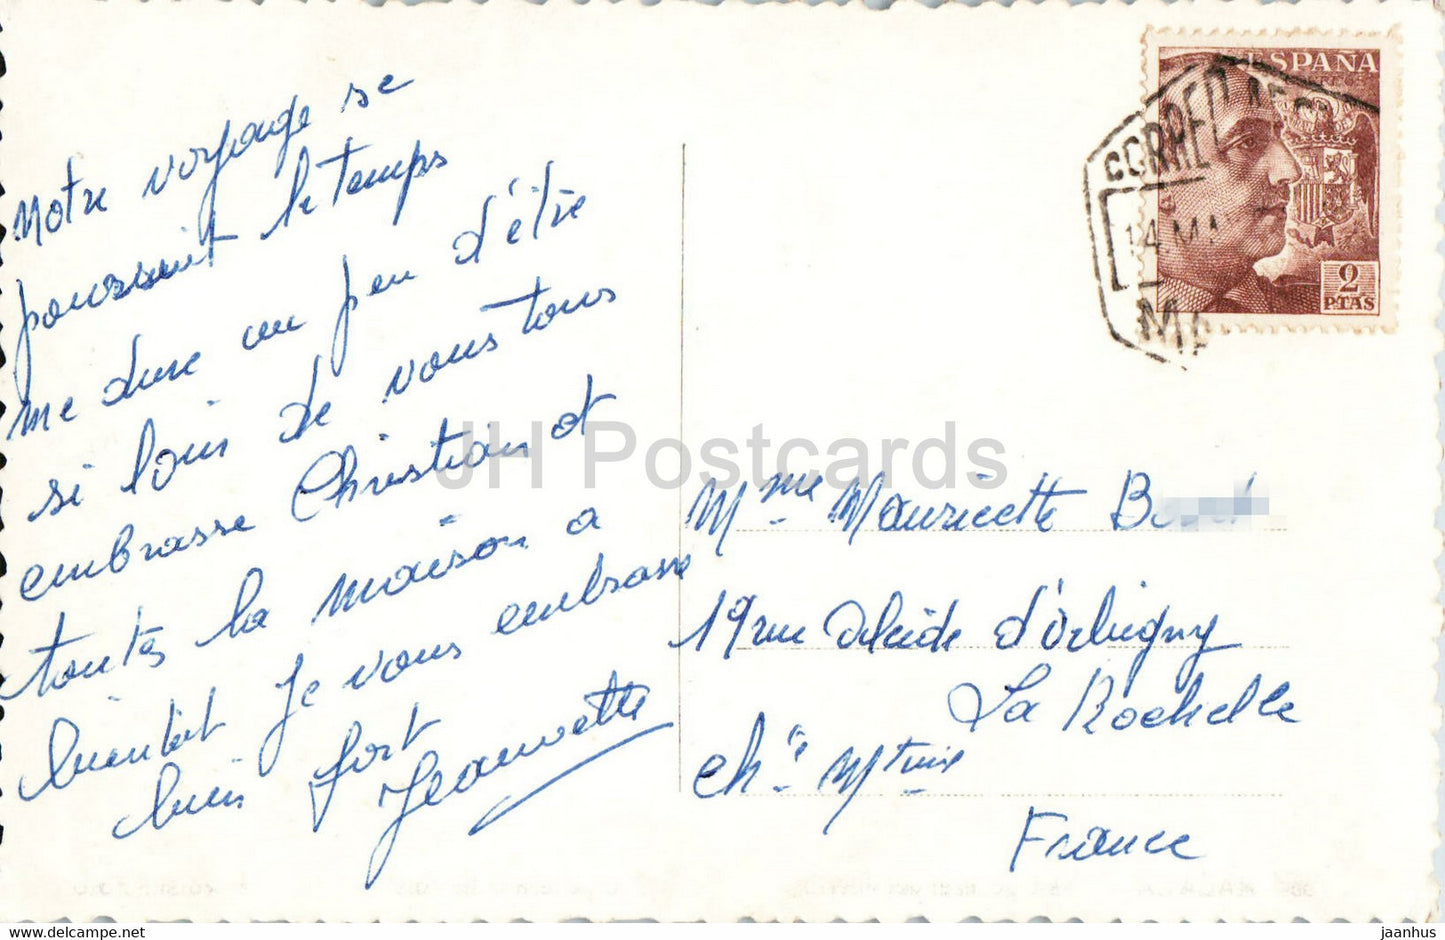 Malaga - Vista general del Puerto - Vue generale du Port - 354 - old postcard - Spain - used